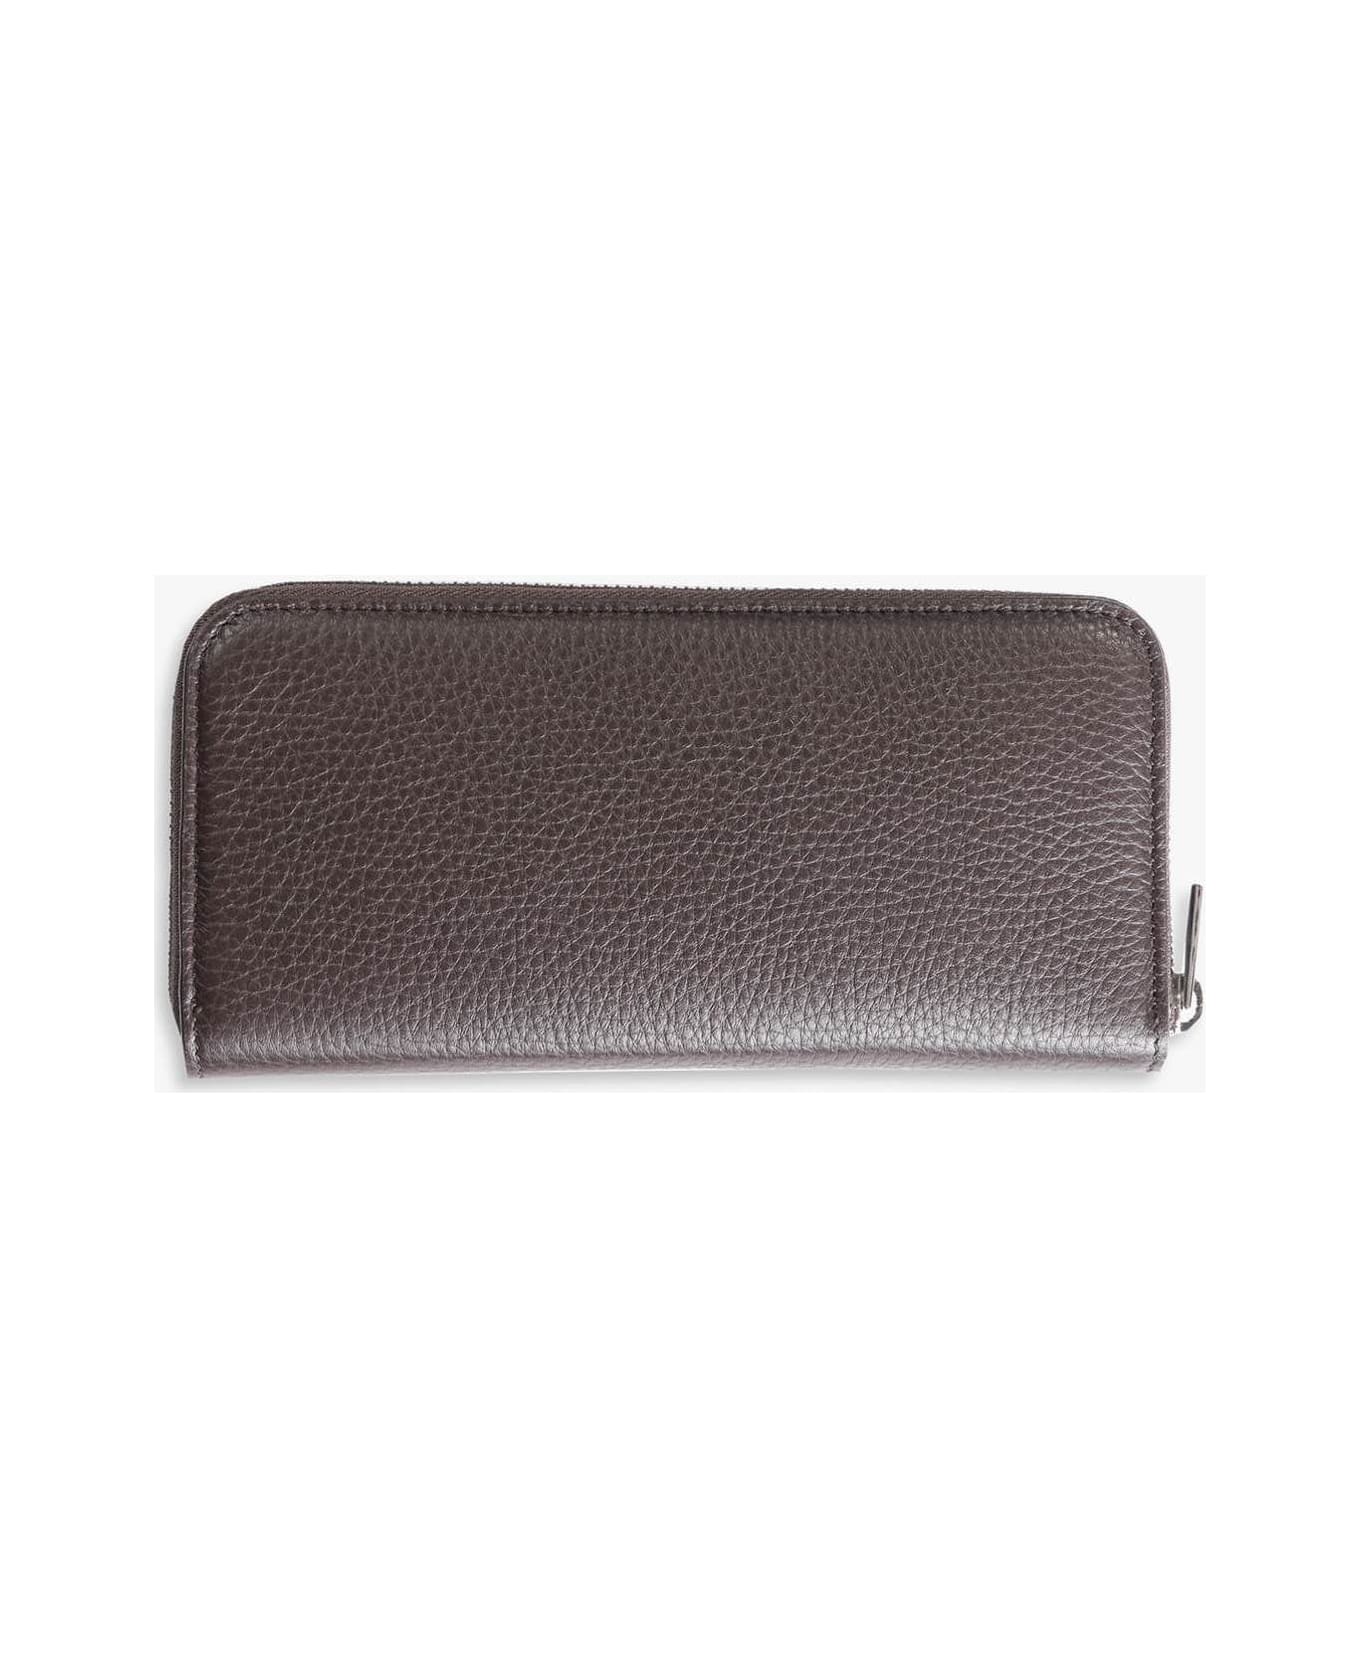 Larusmiani Wallet 'lira' Wallet - Chocolate 財布